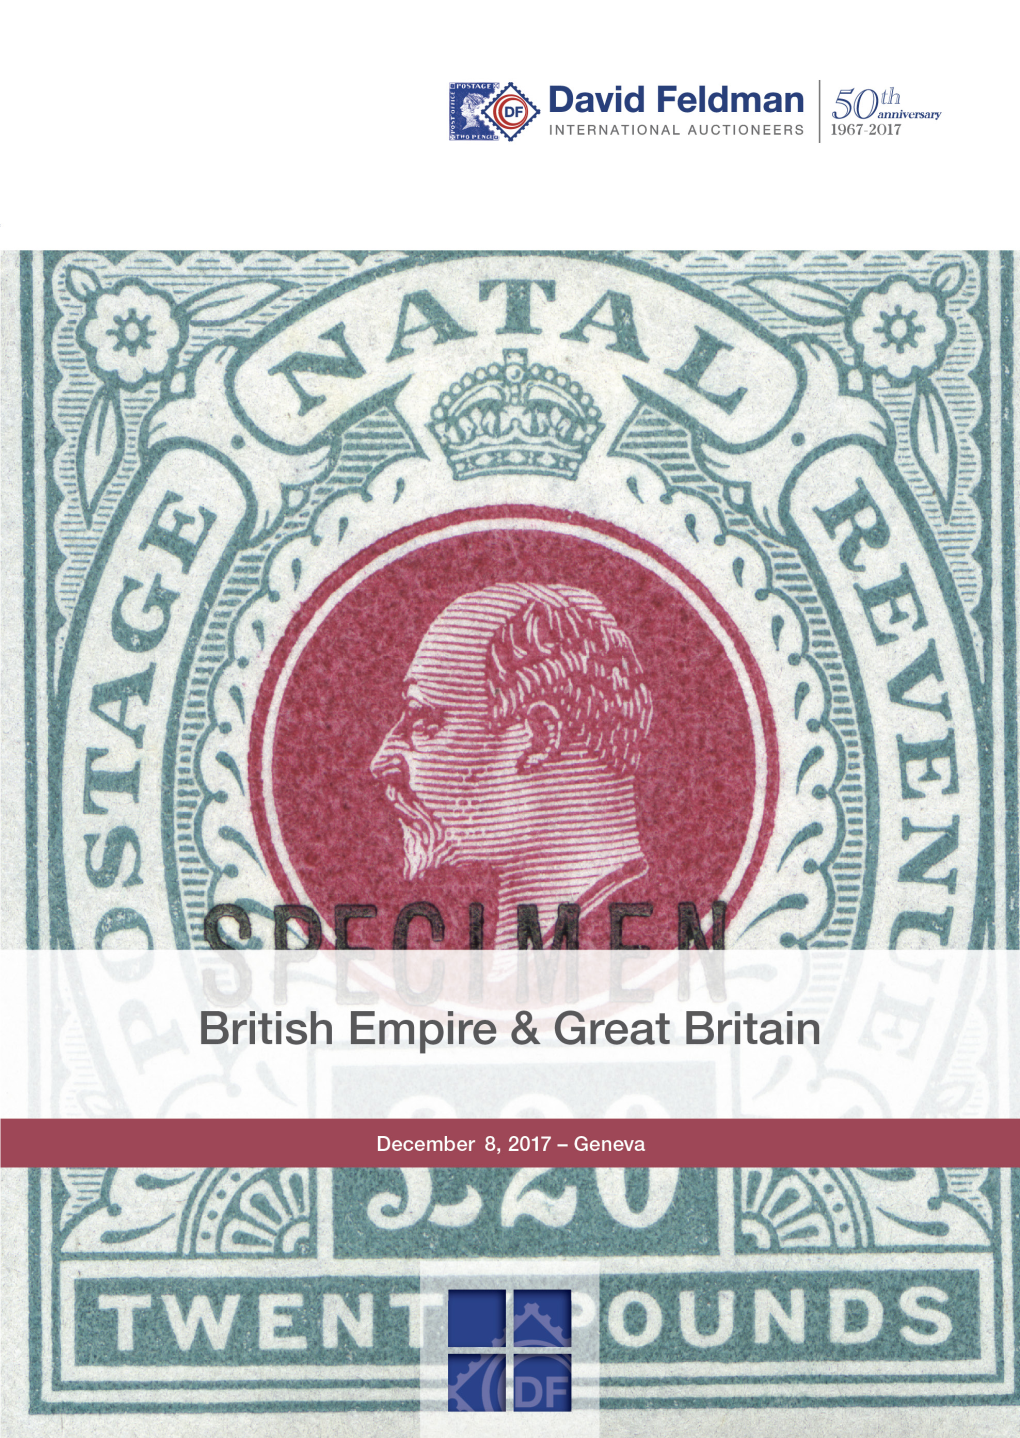 Great Britain and British Empire